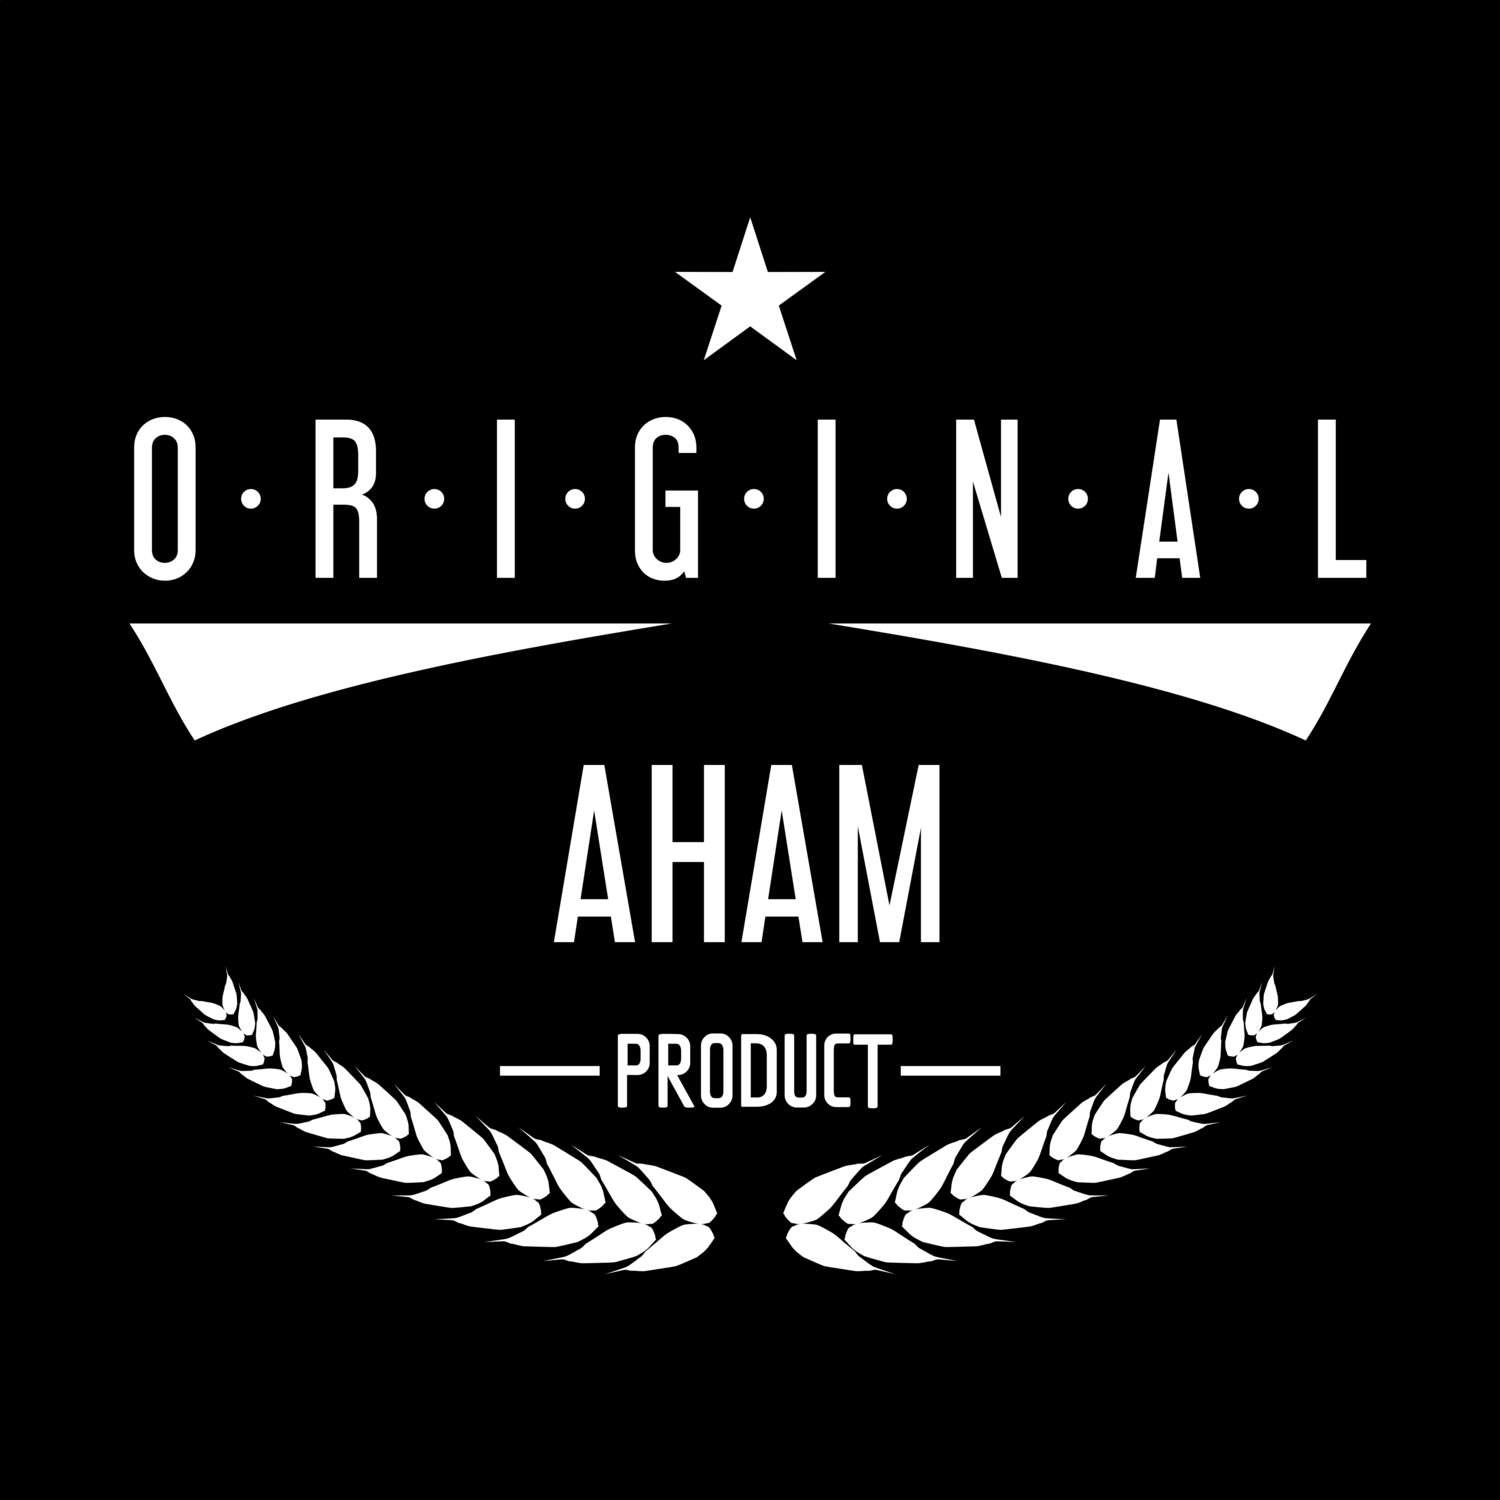 Aham T-Shirt »Original Product«